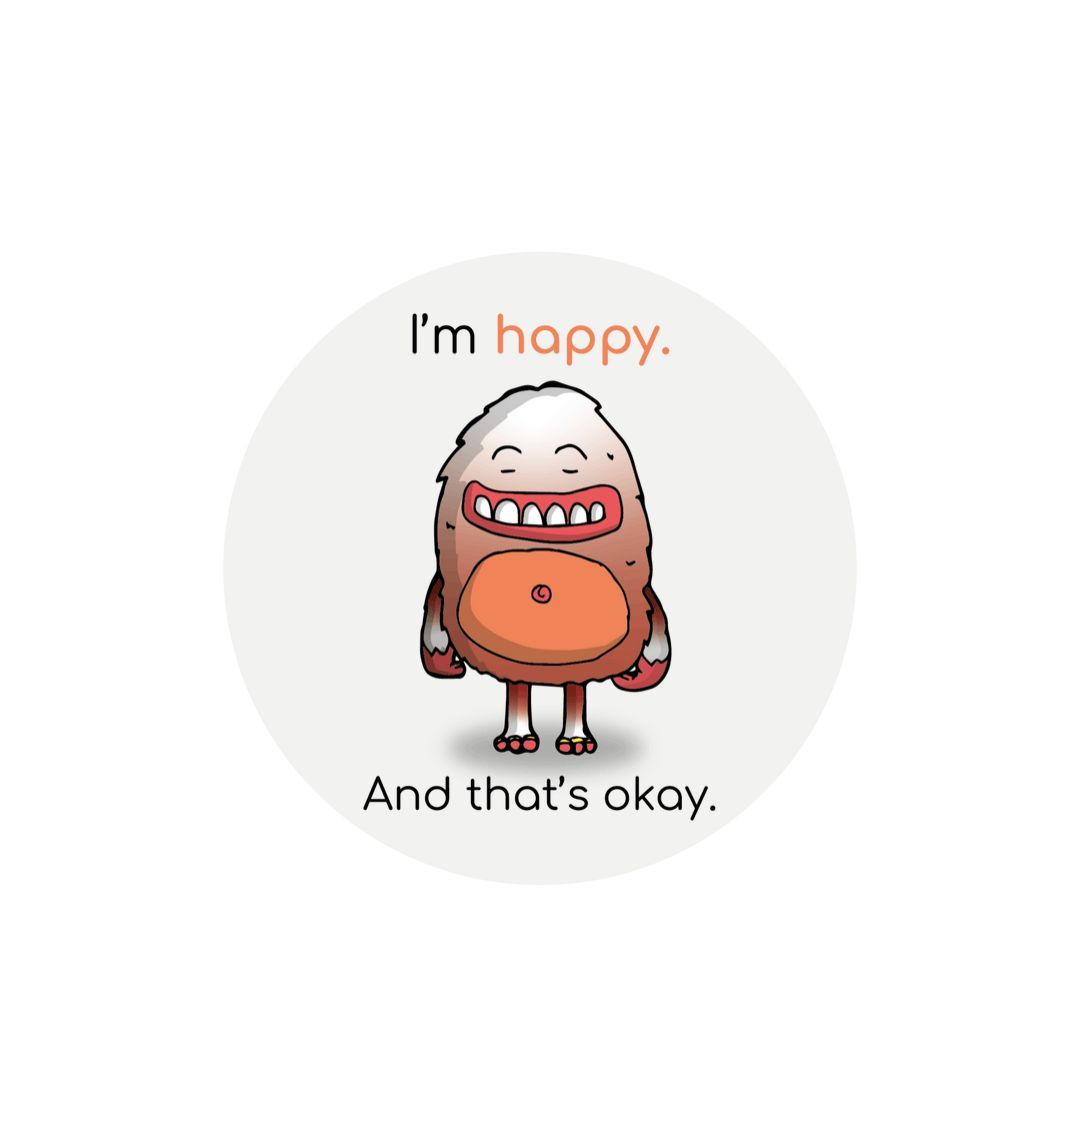 White \"I'm happy. And that's okay!\" Round Children's Emotions Sticker 60mm x 60mm